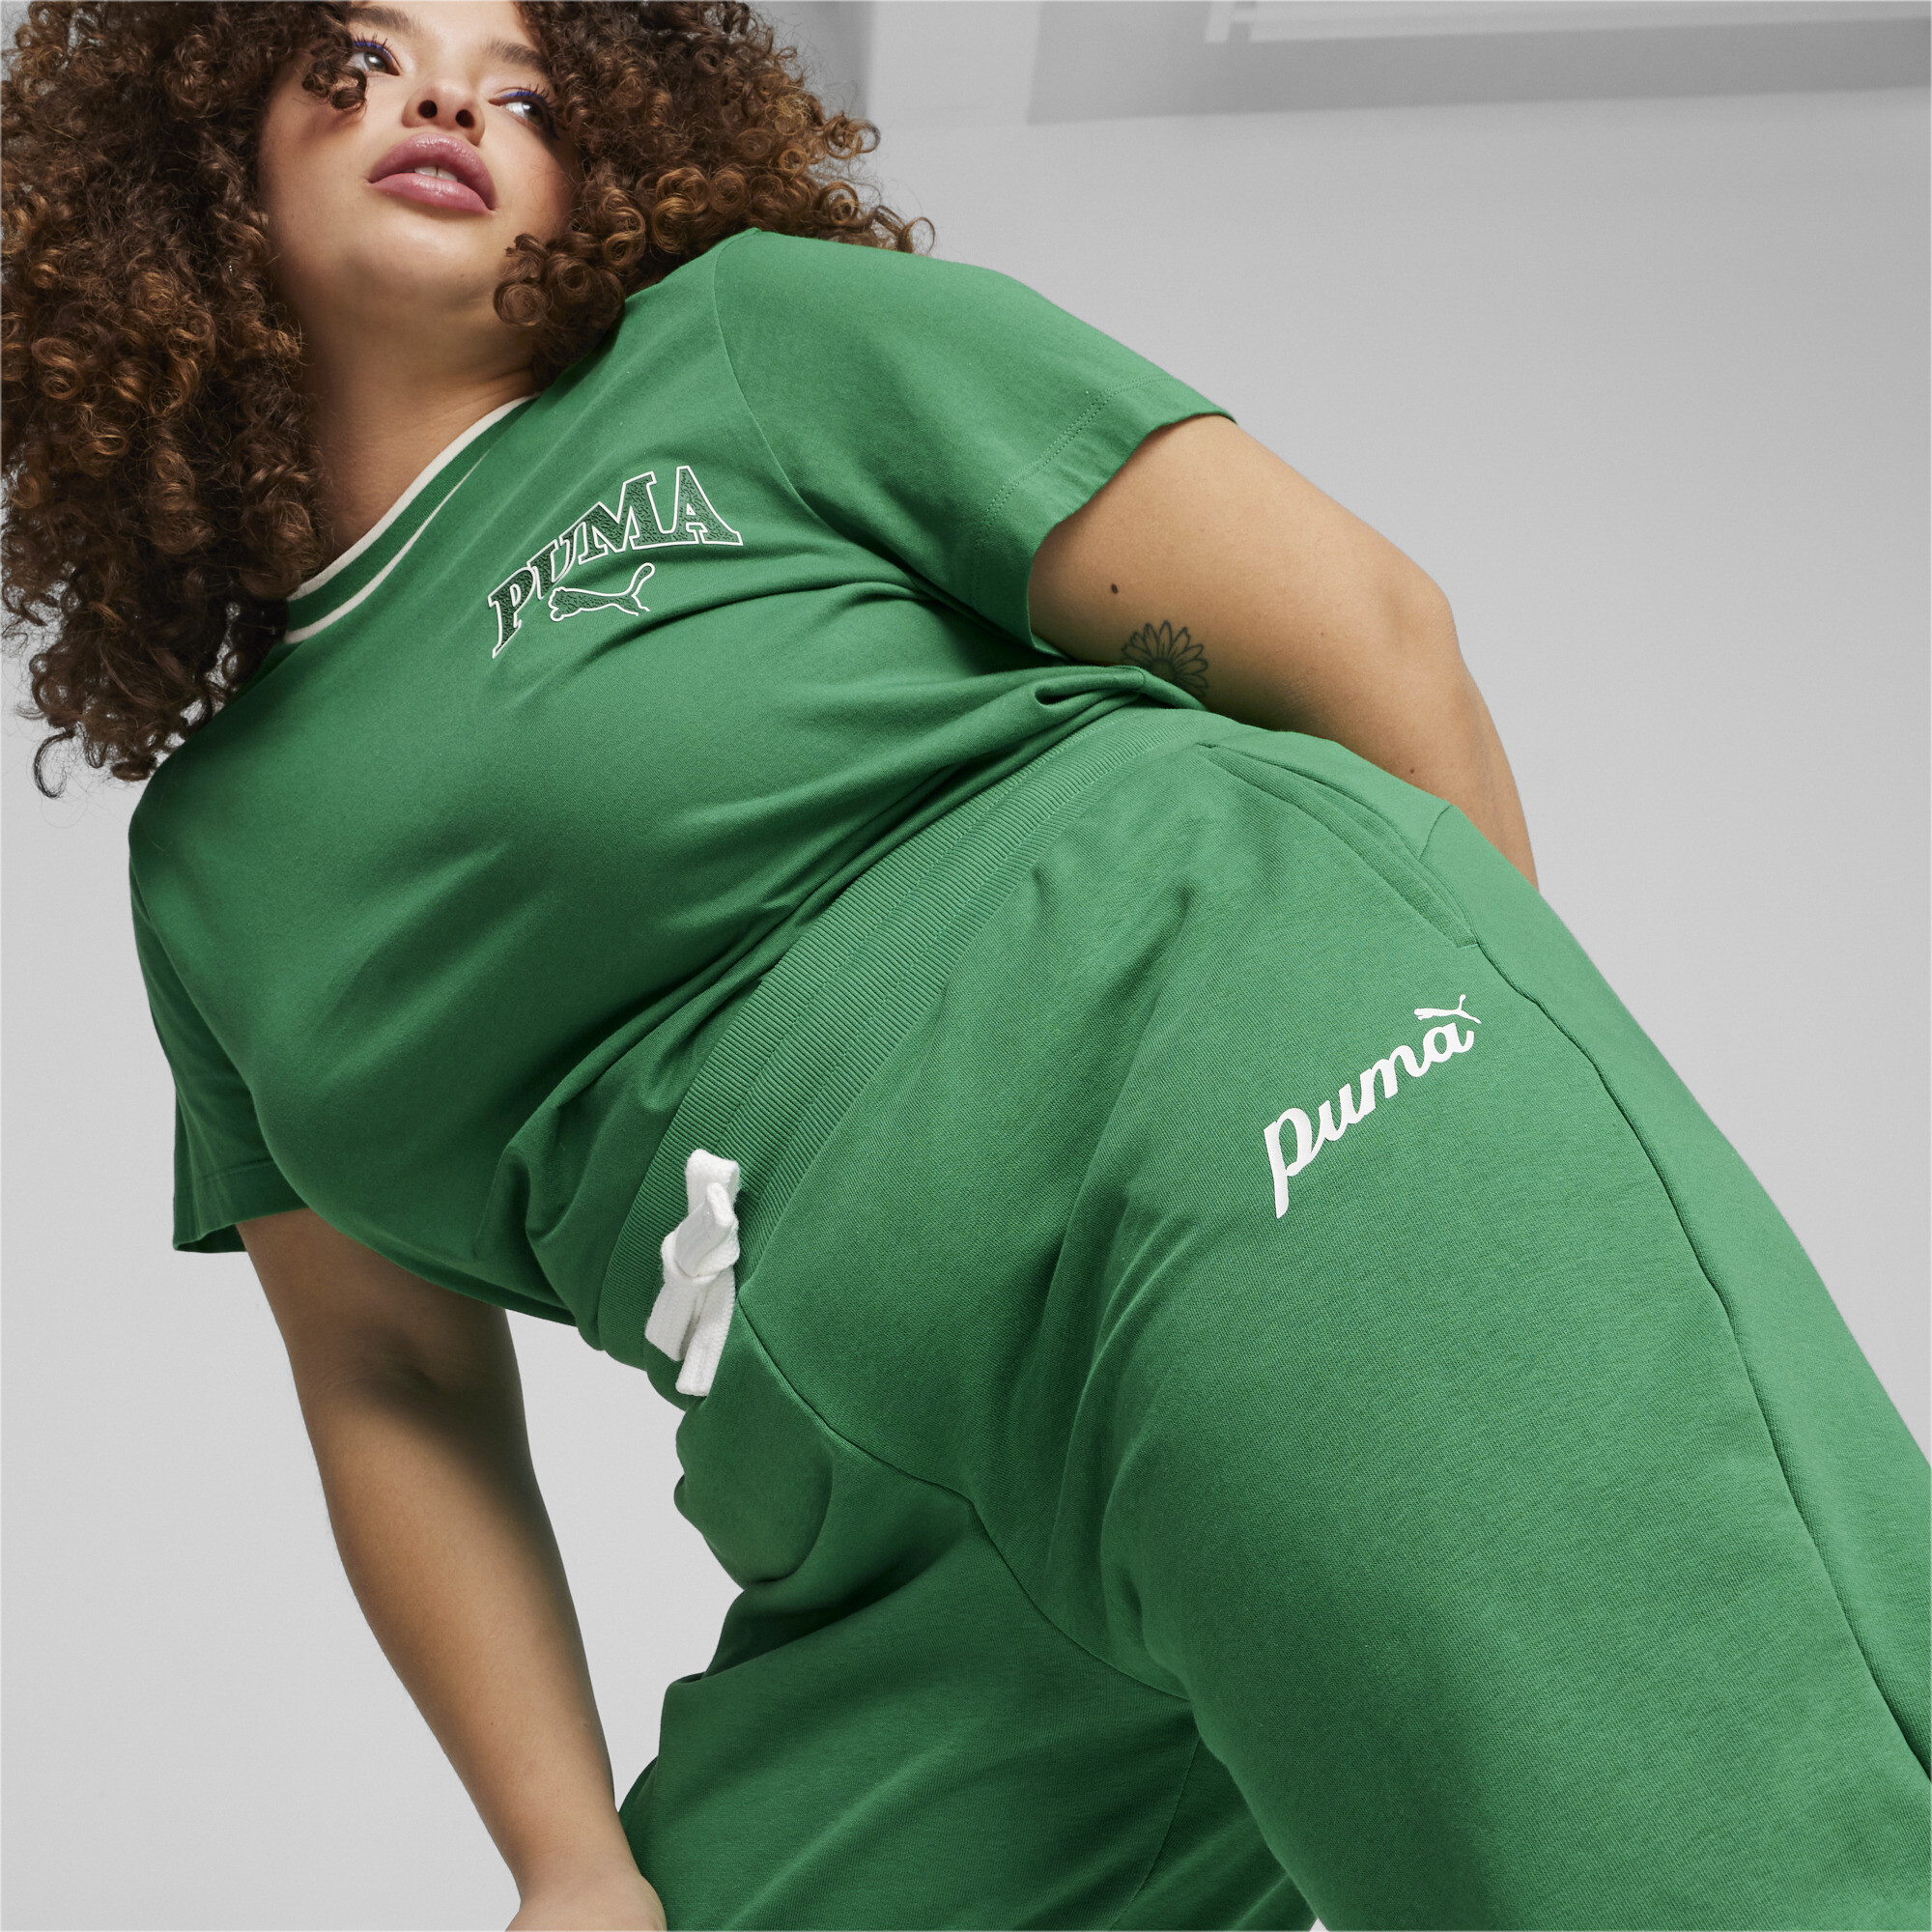 Women's PUMA ESS+ Script Sweatpants In Green, Size XL